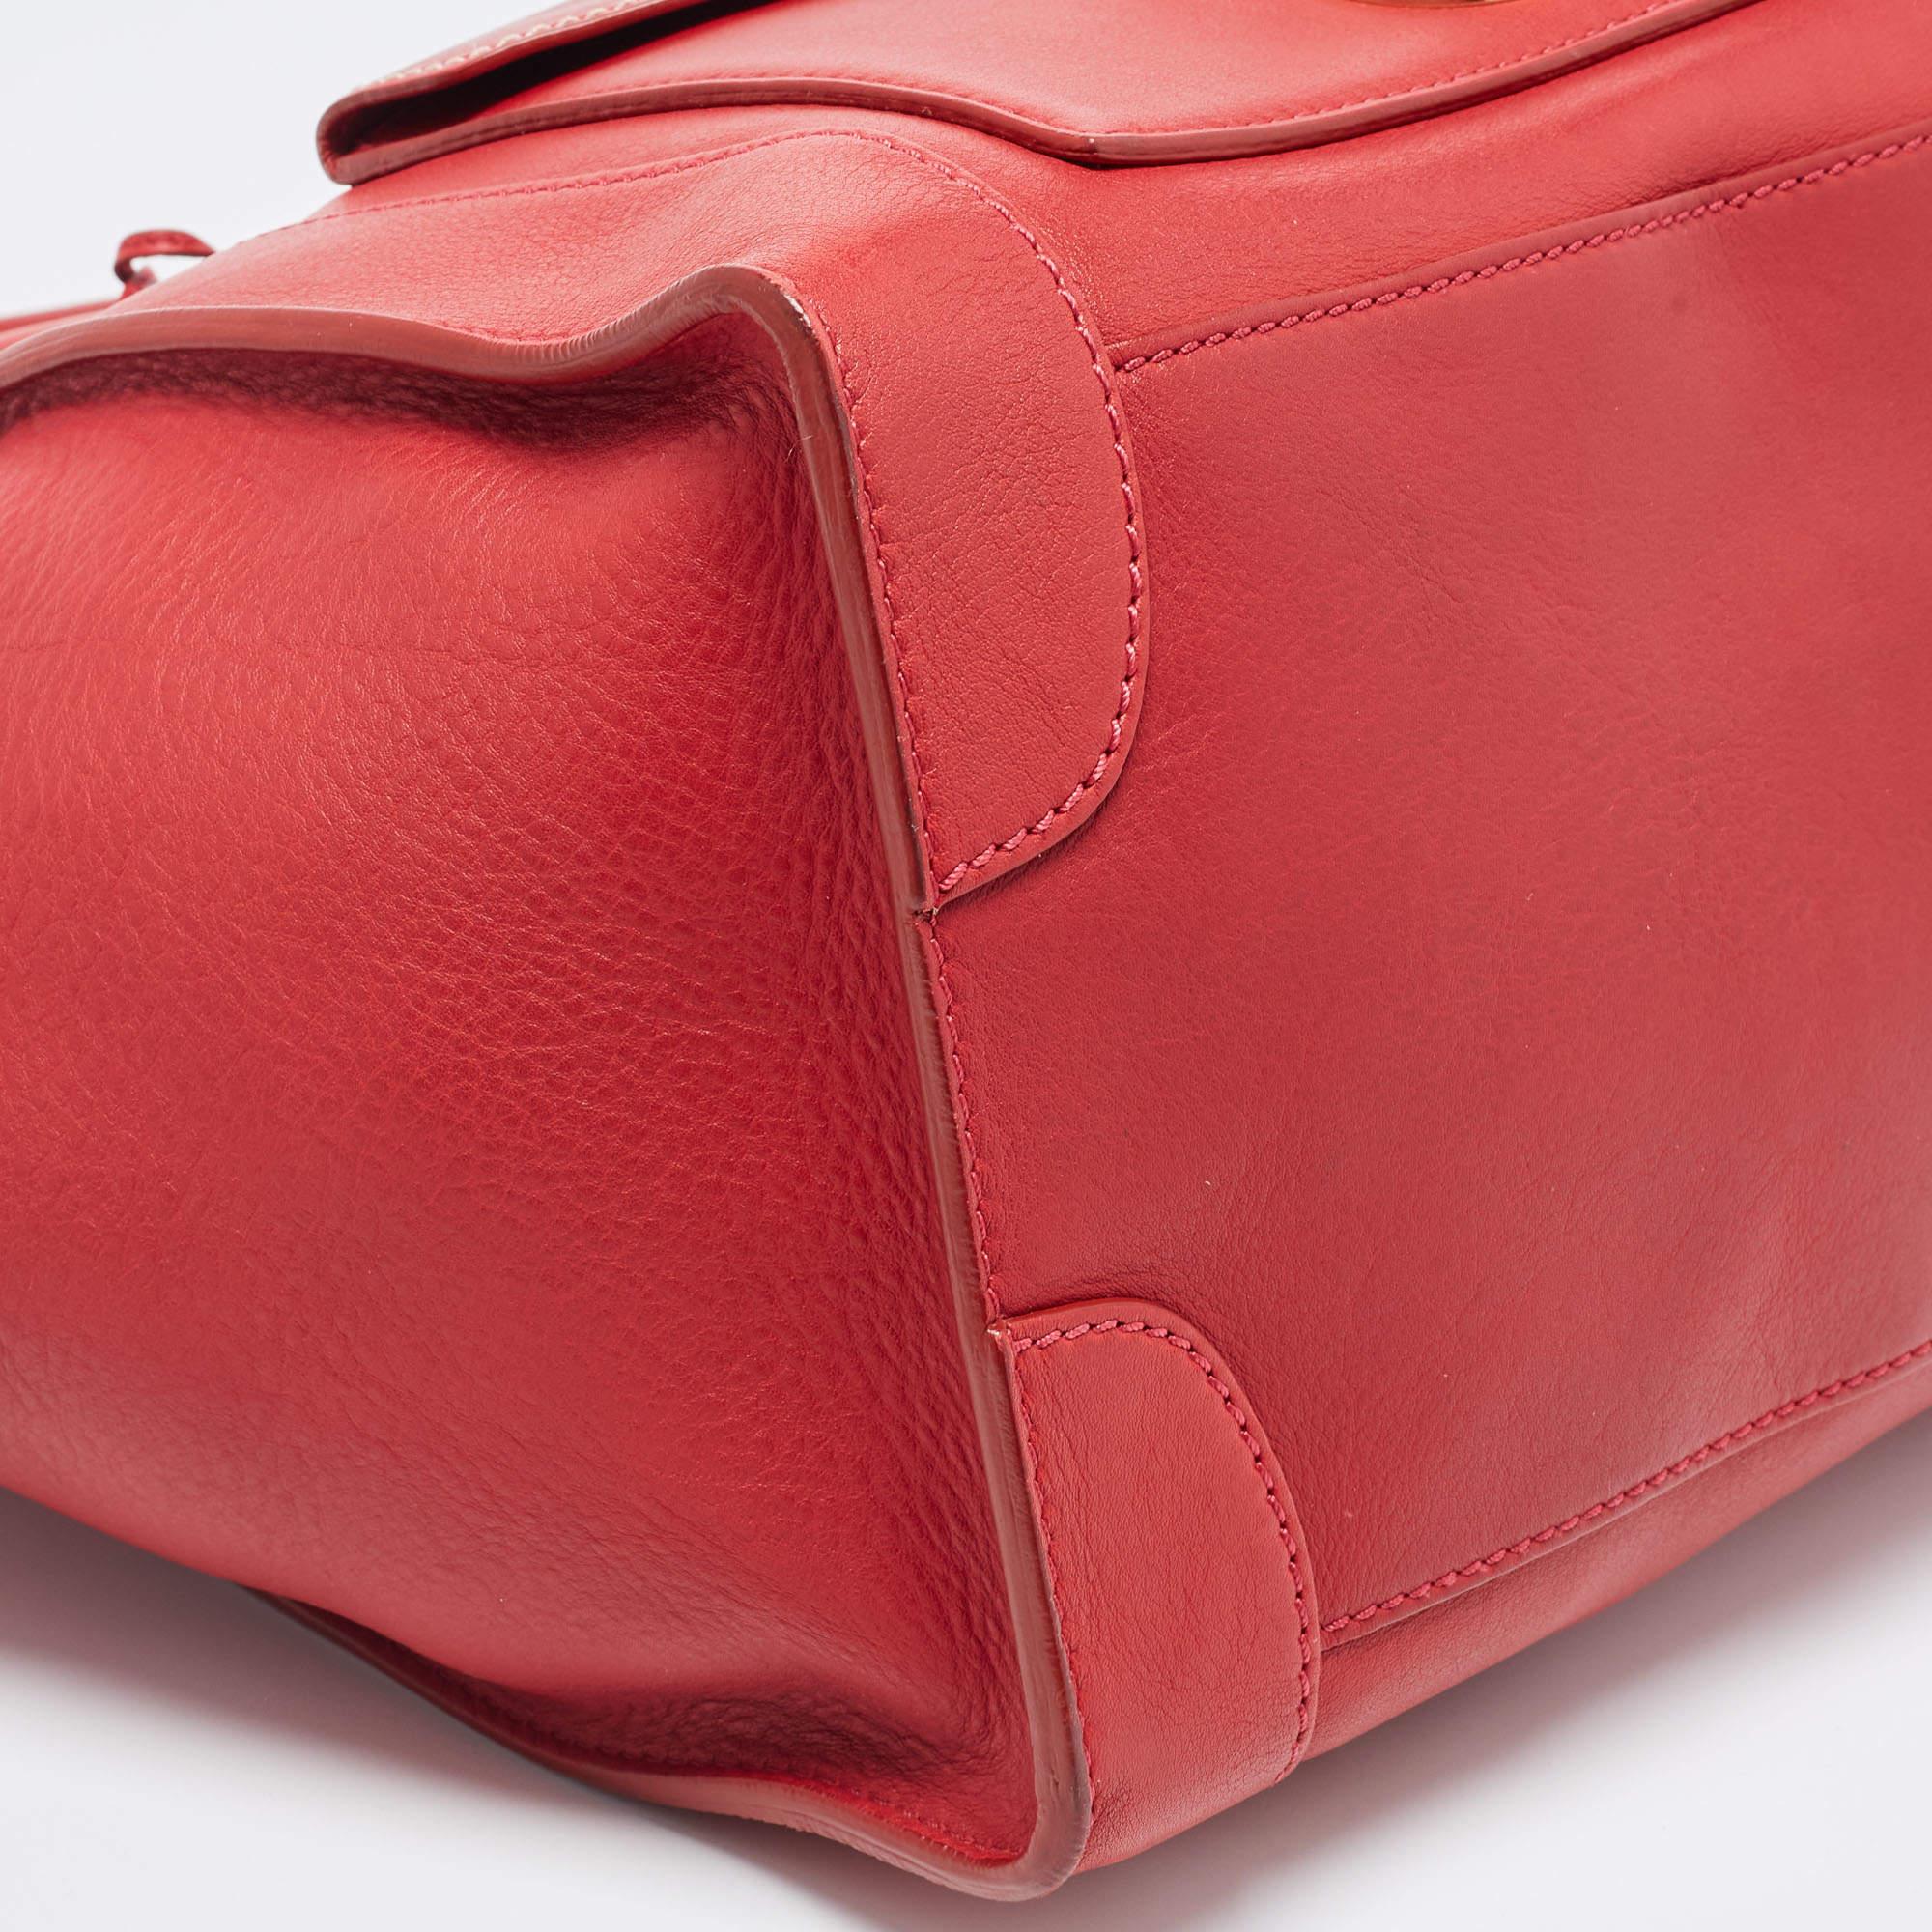 Celine Red Leather Mini Envelope Luggage Tote 4